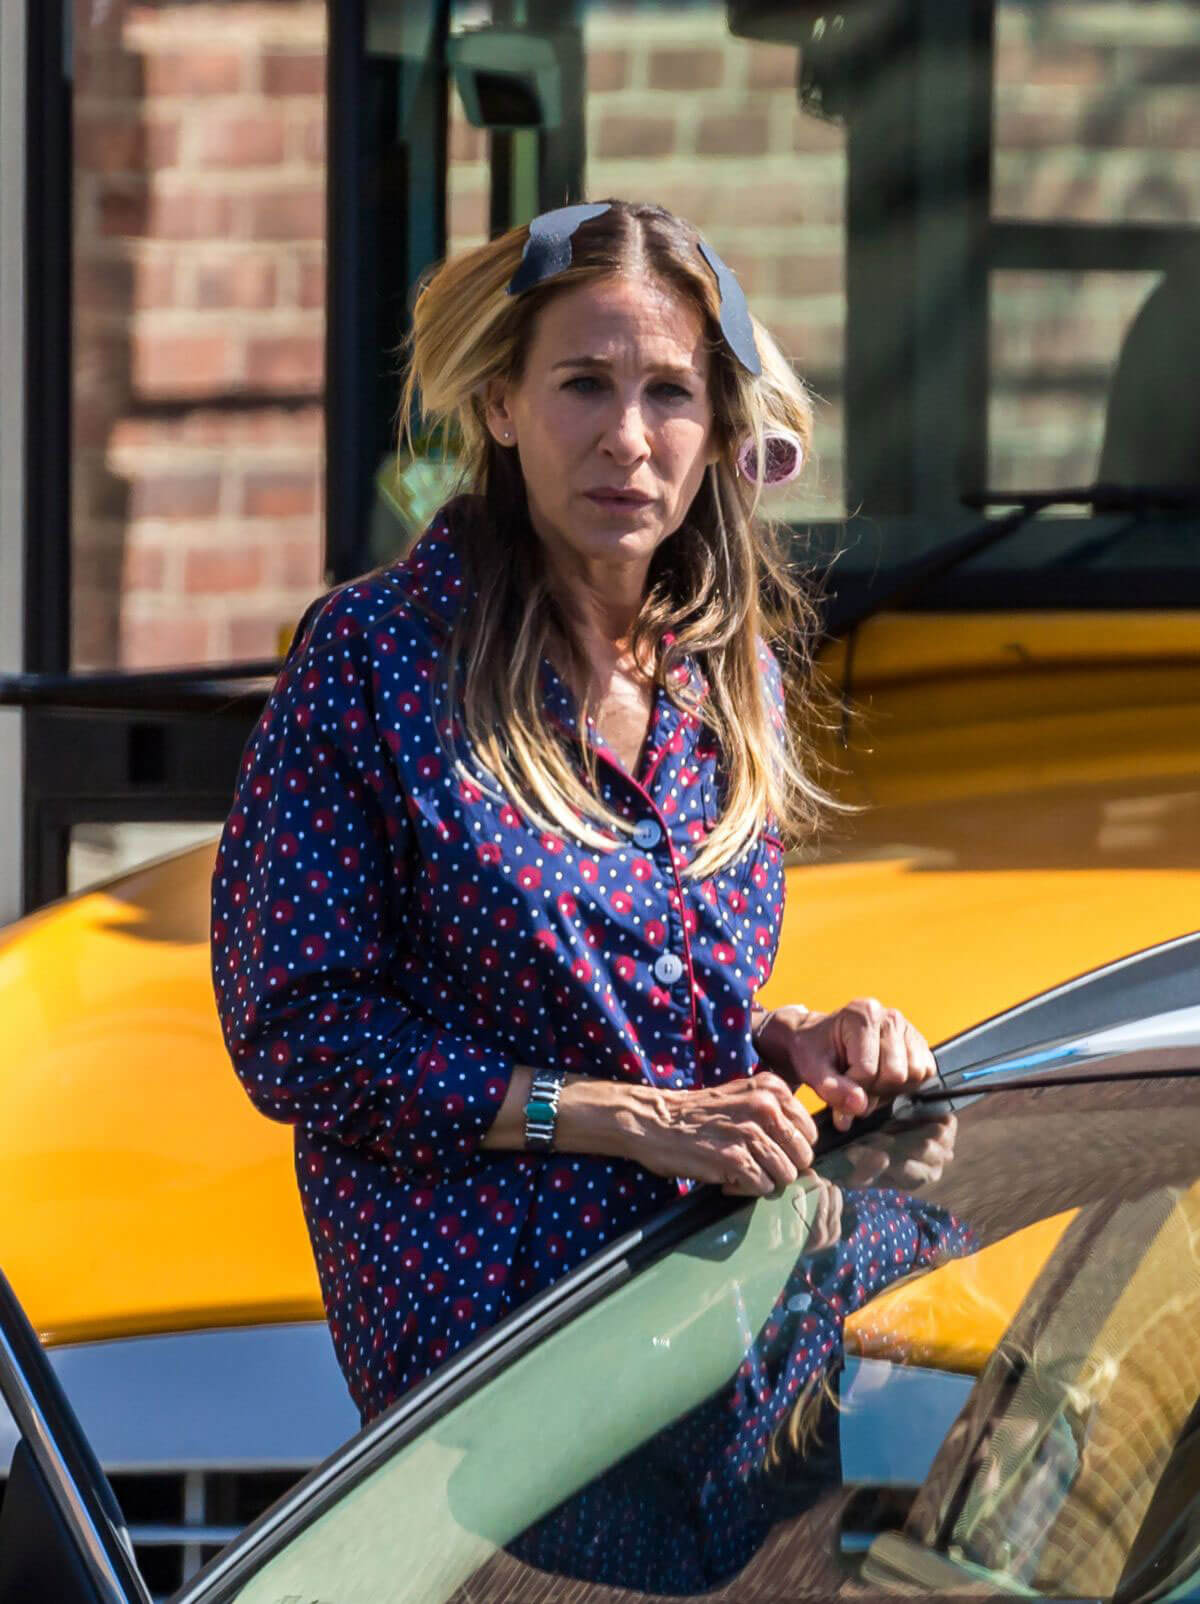 Sarah Jessica Parker on the Set of Divorce 2 in New York Images